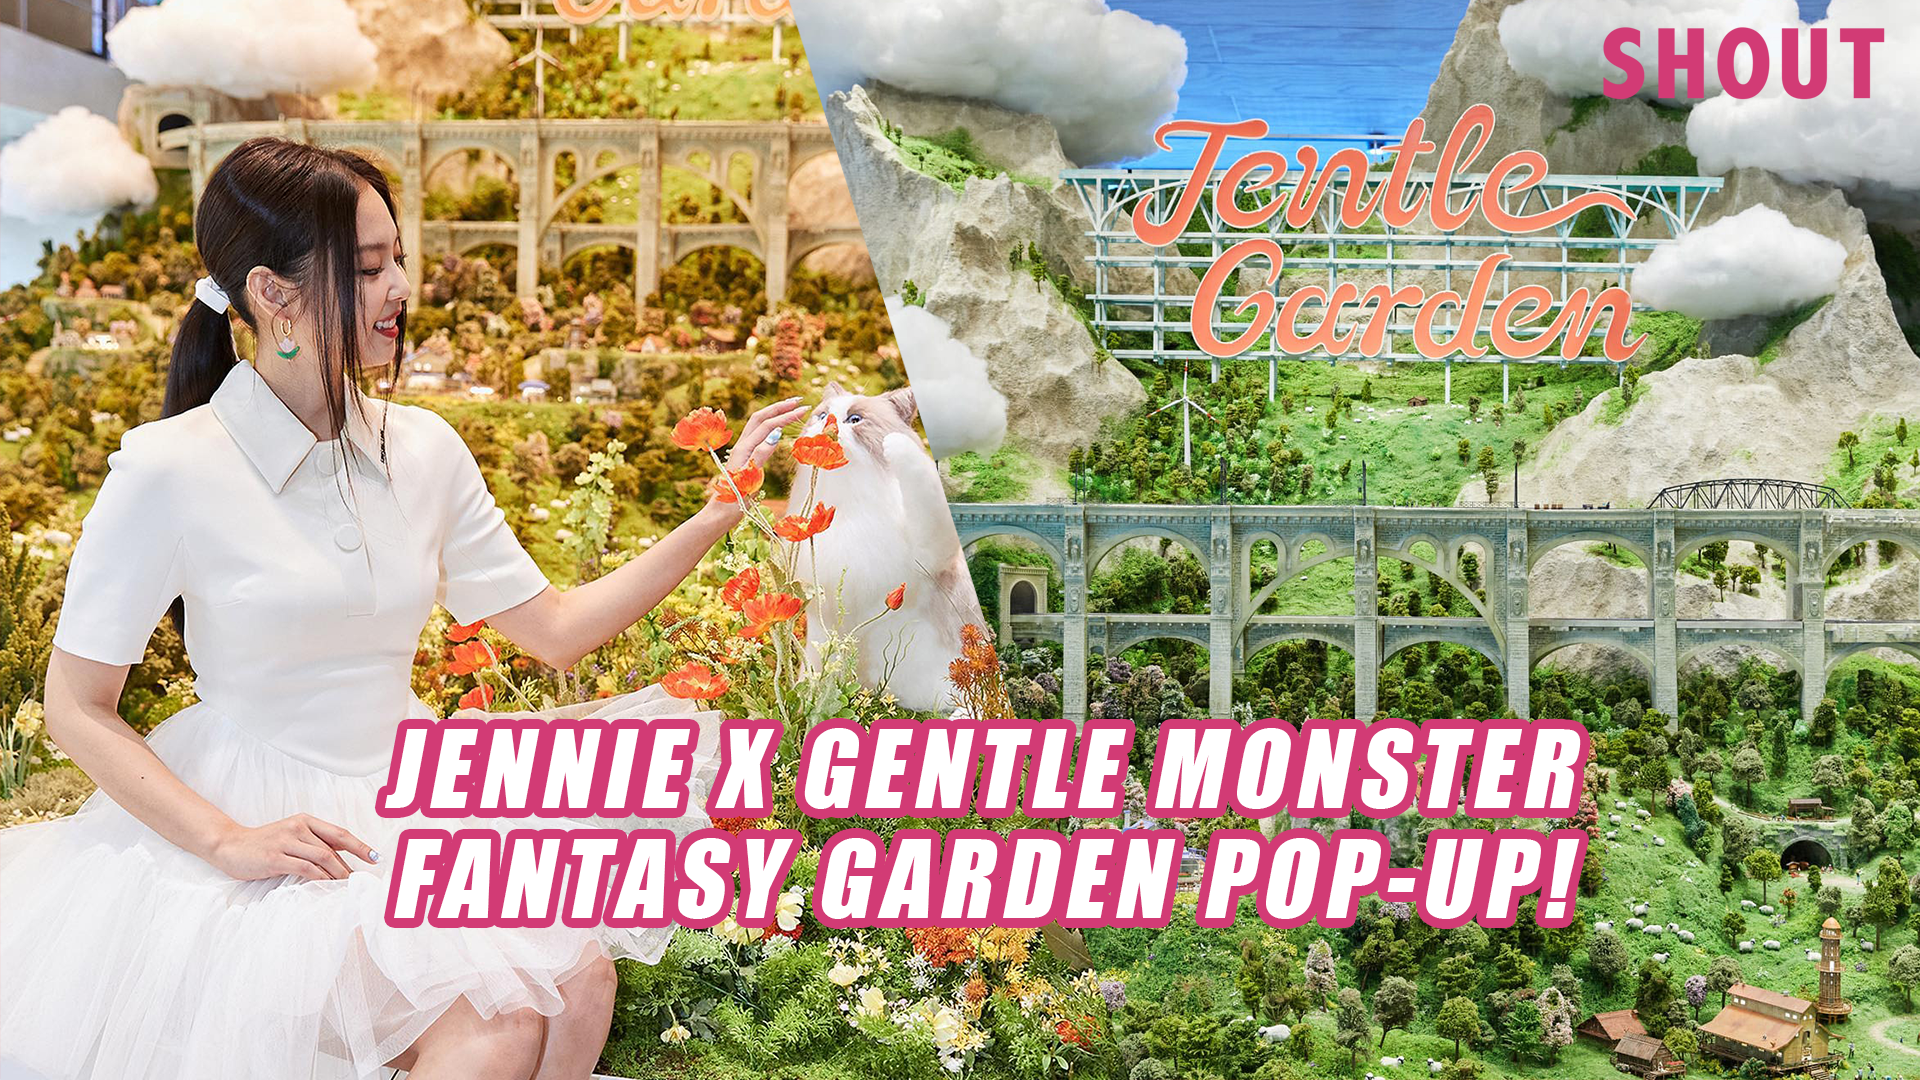 al Twitter: jentle garden collection by jennie x gentle monster   / X